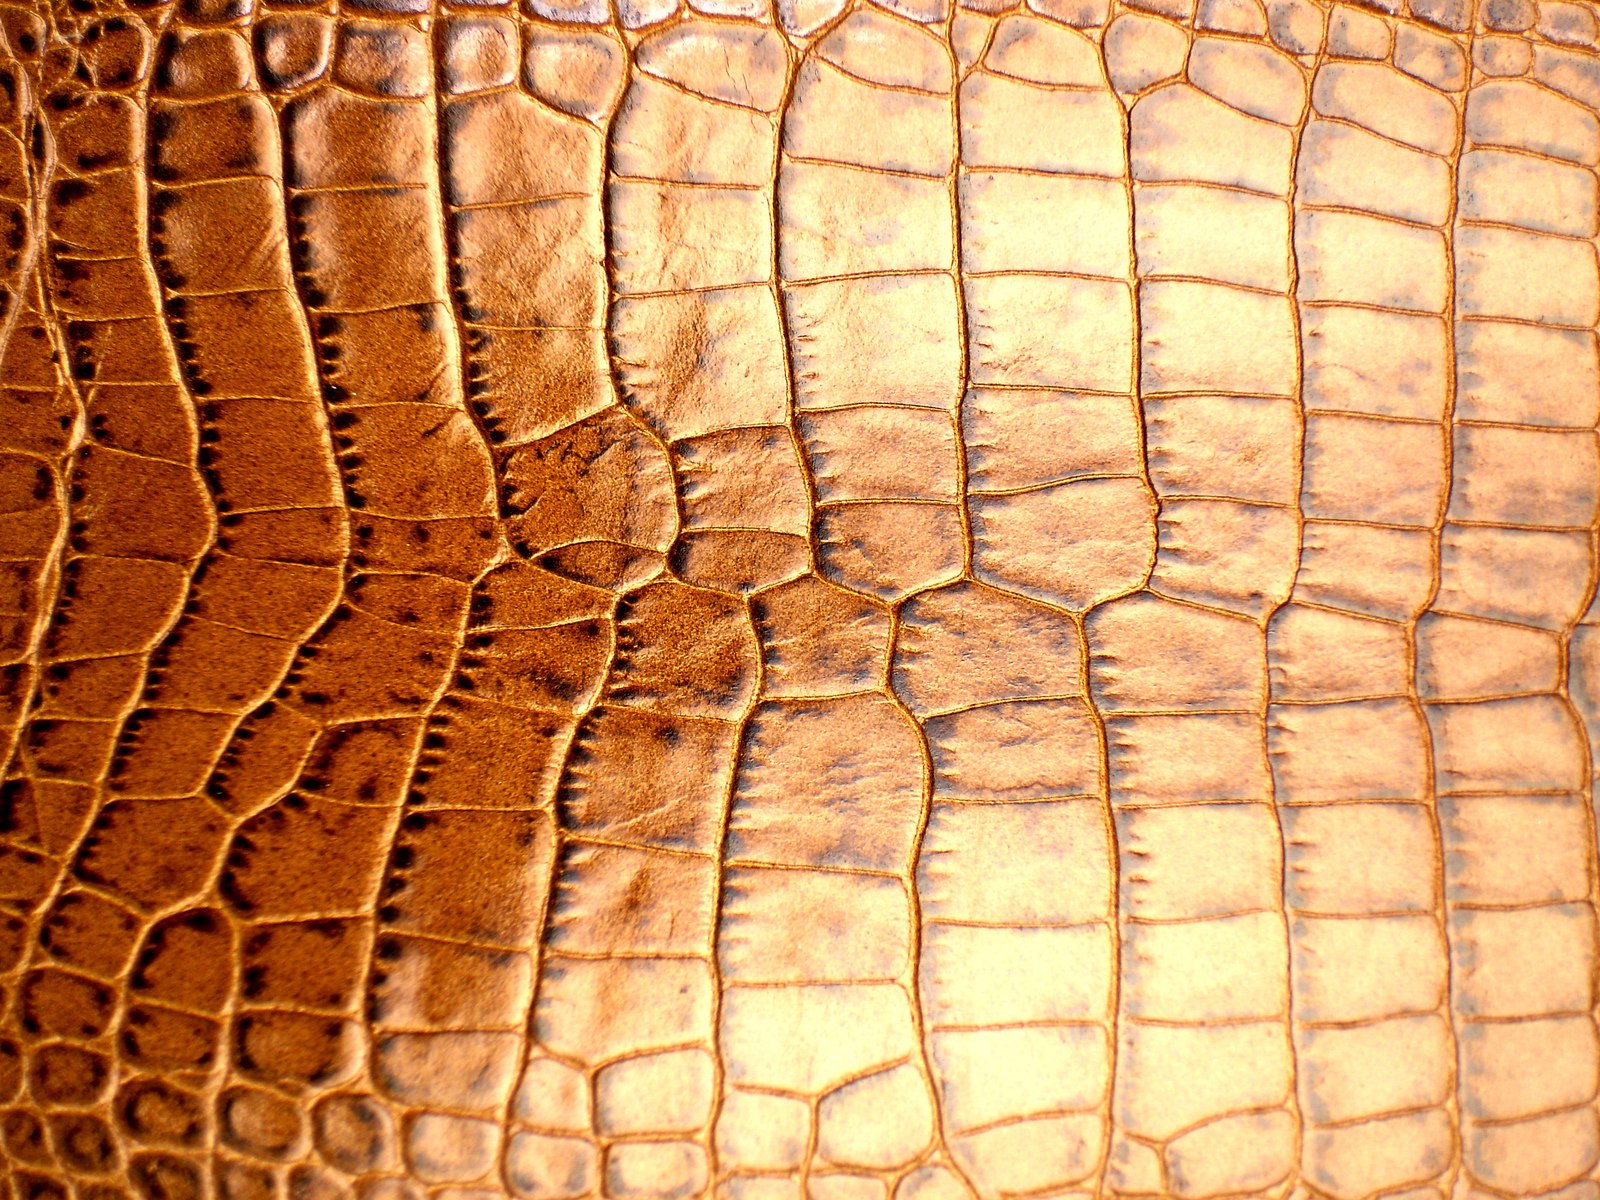 brown crocodile skin with some ridges